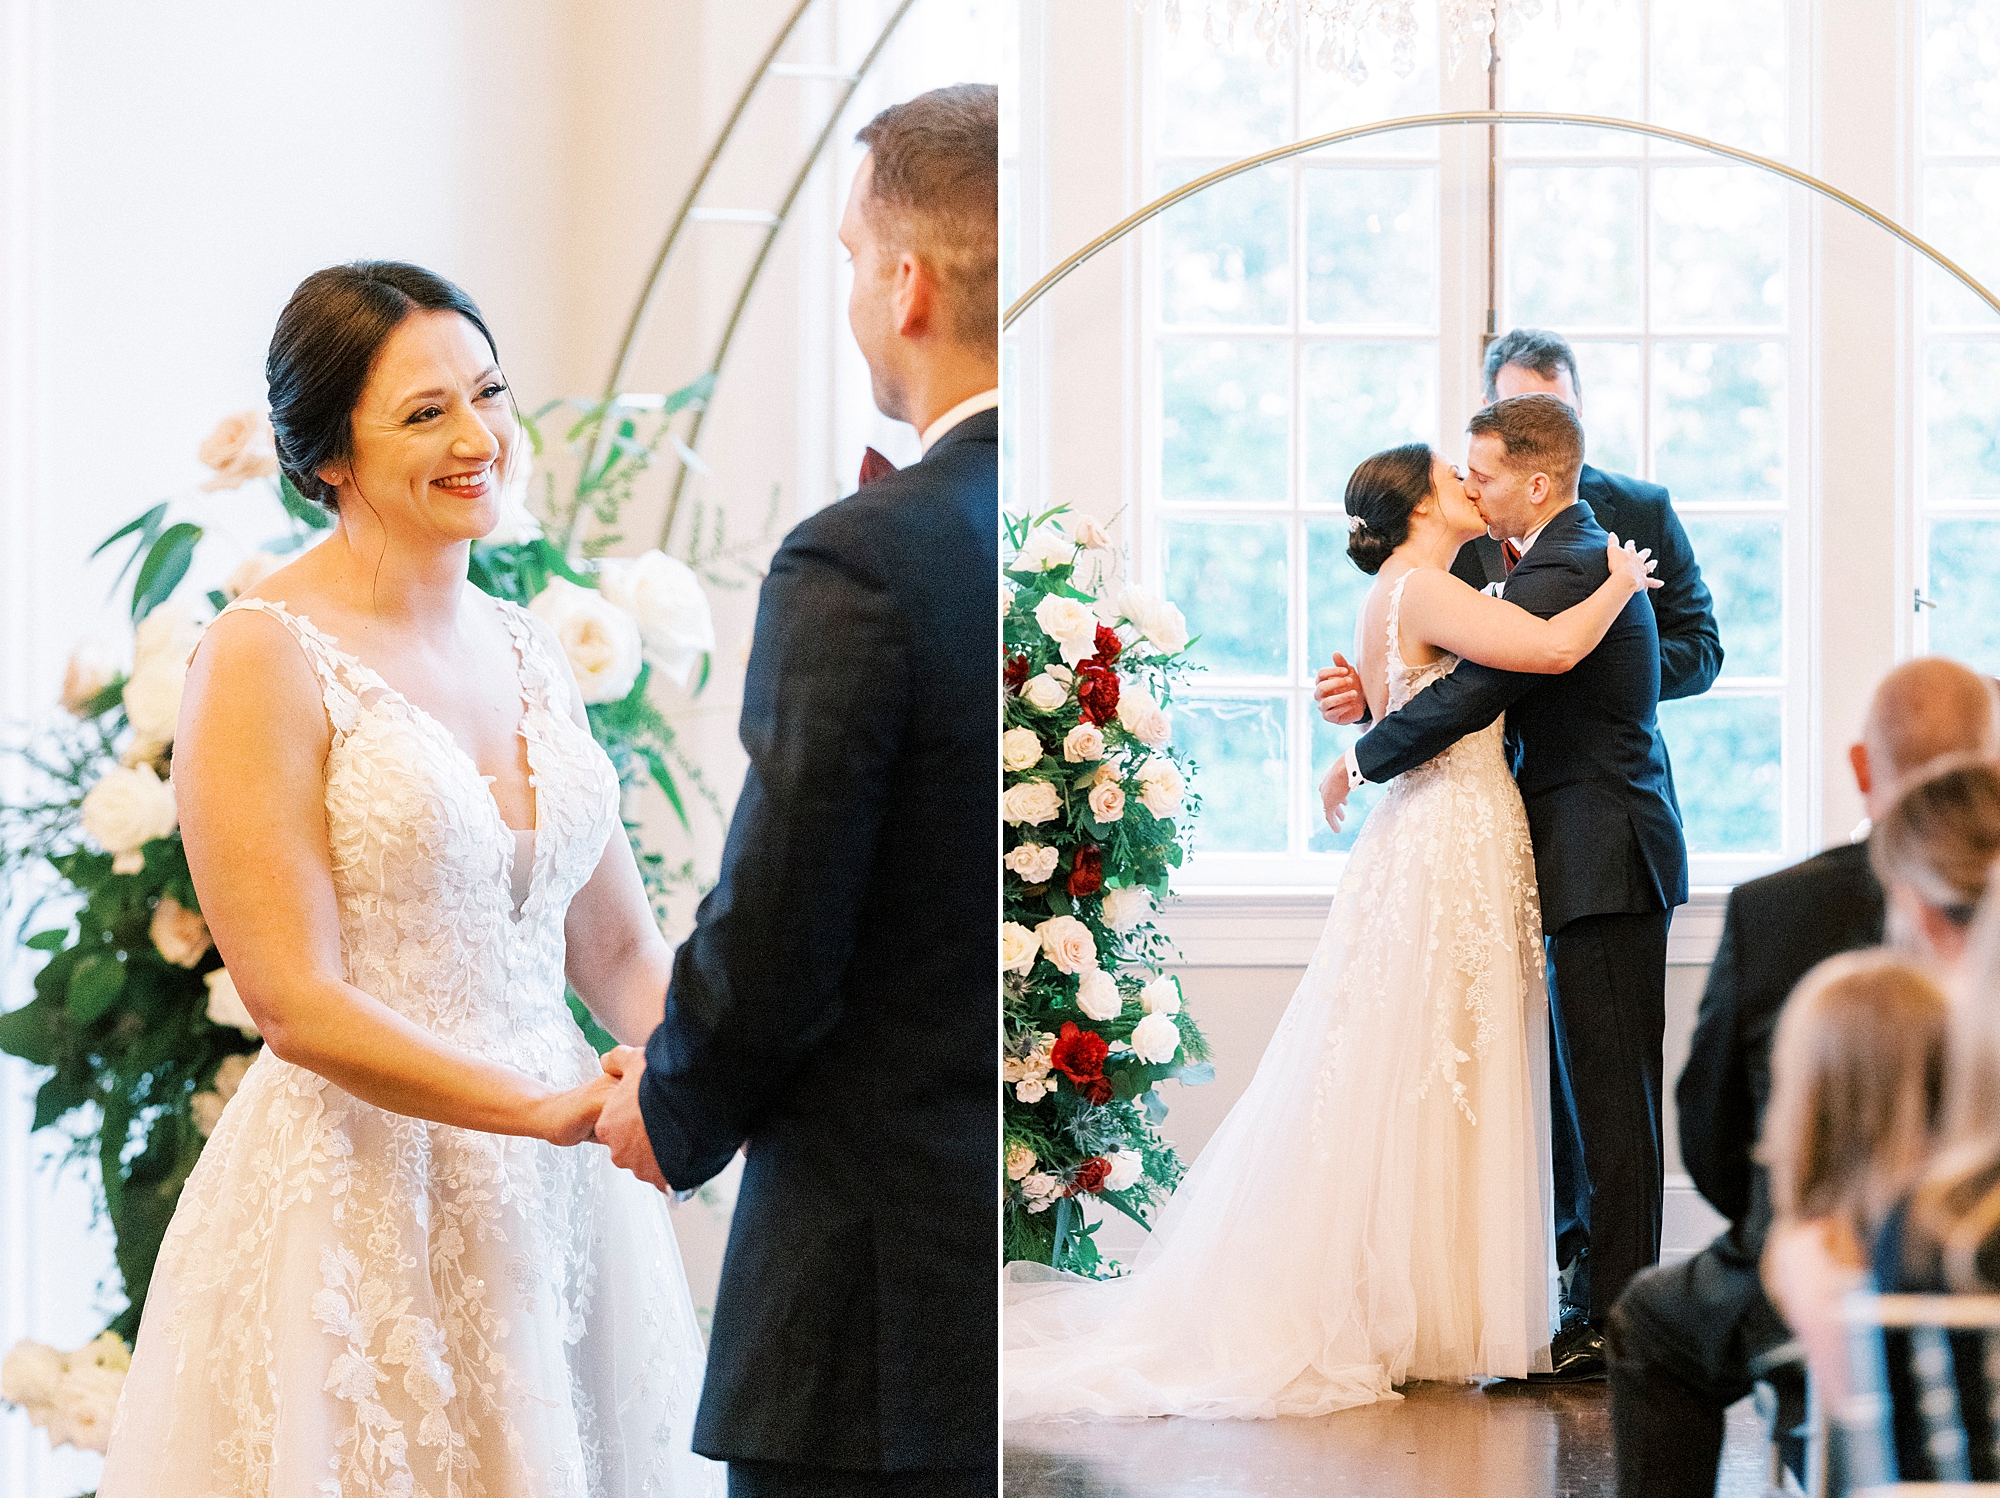 newlyweds kiss under gold arbor during ceremony inside Separk Mansion